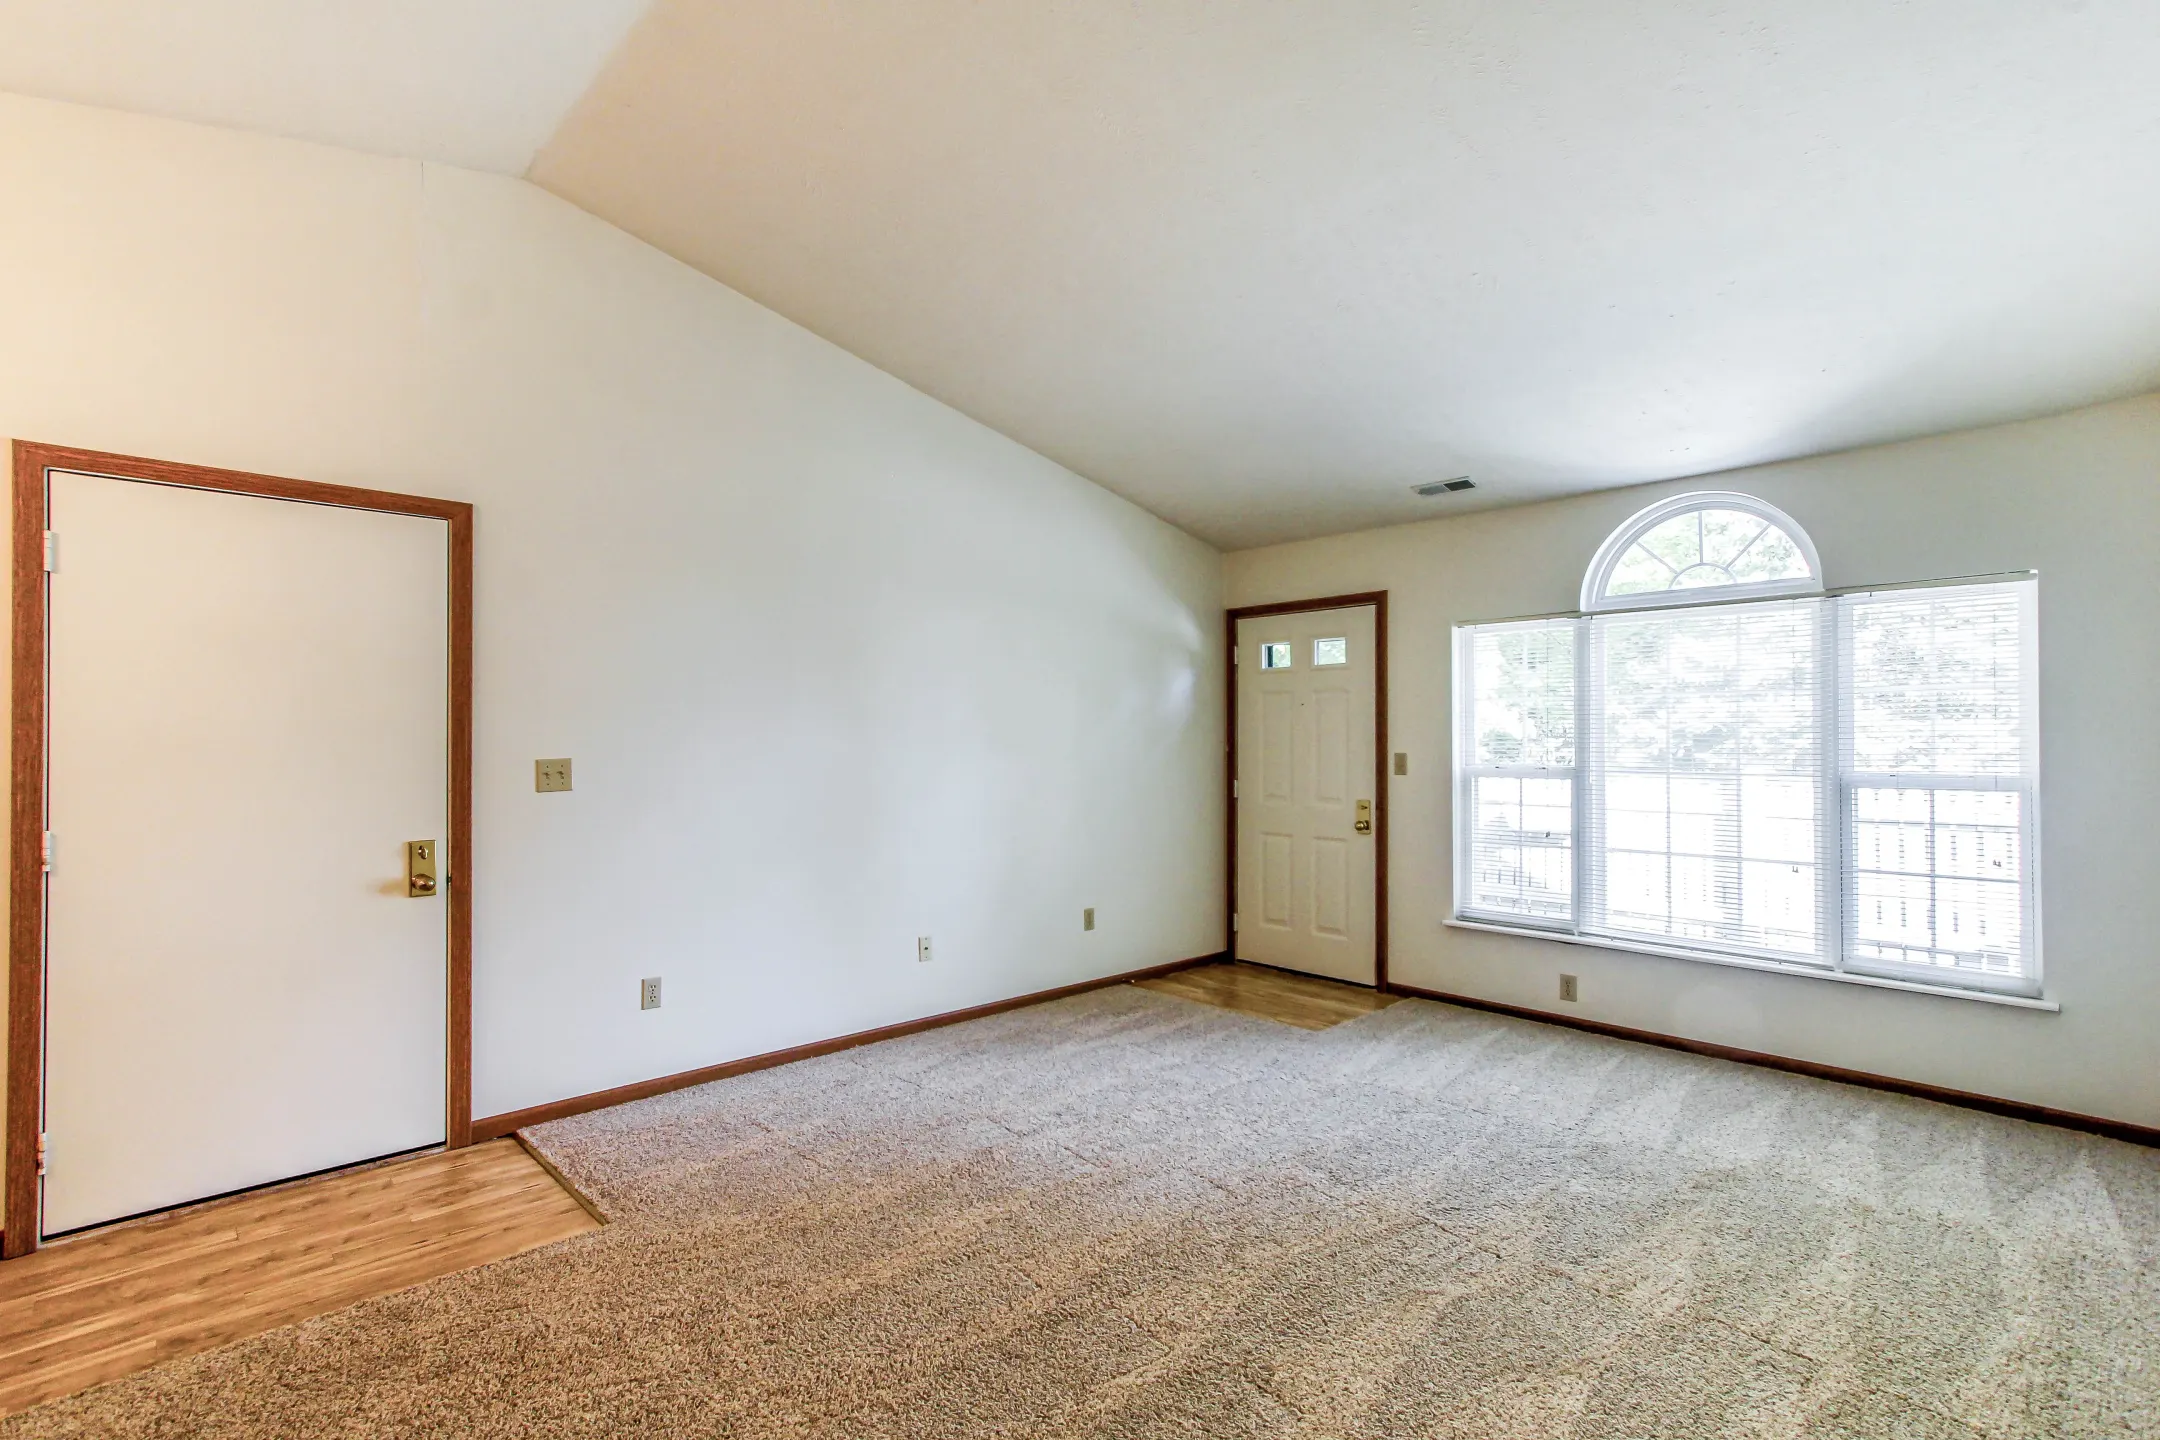 Living Room - Hunters Ridge - Meadville, PA